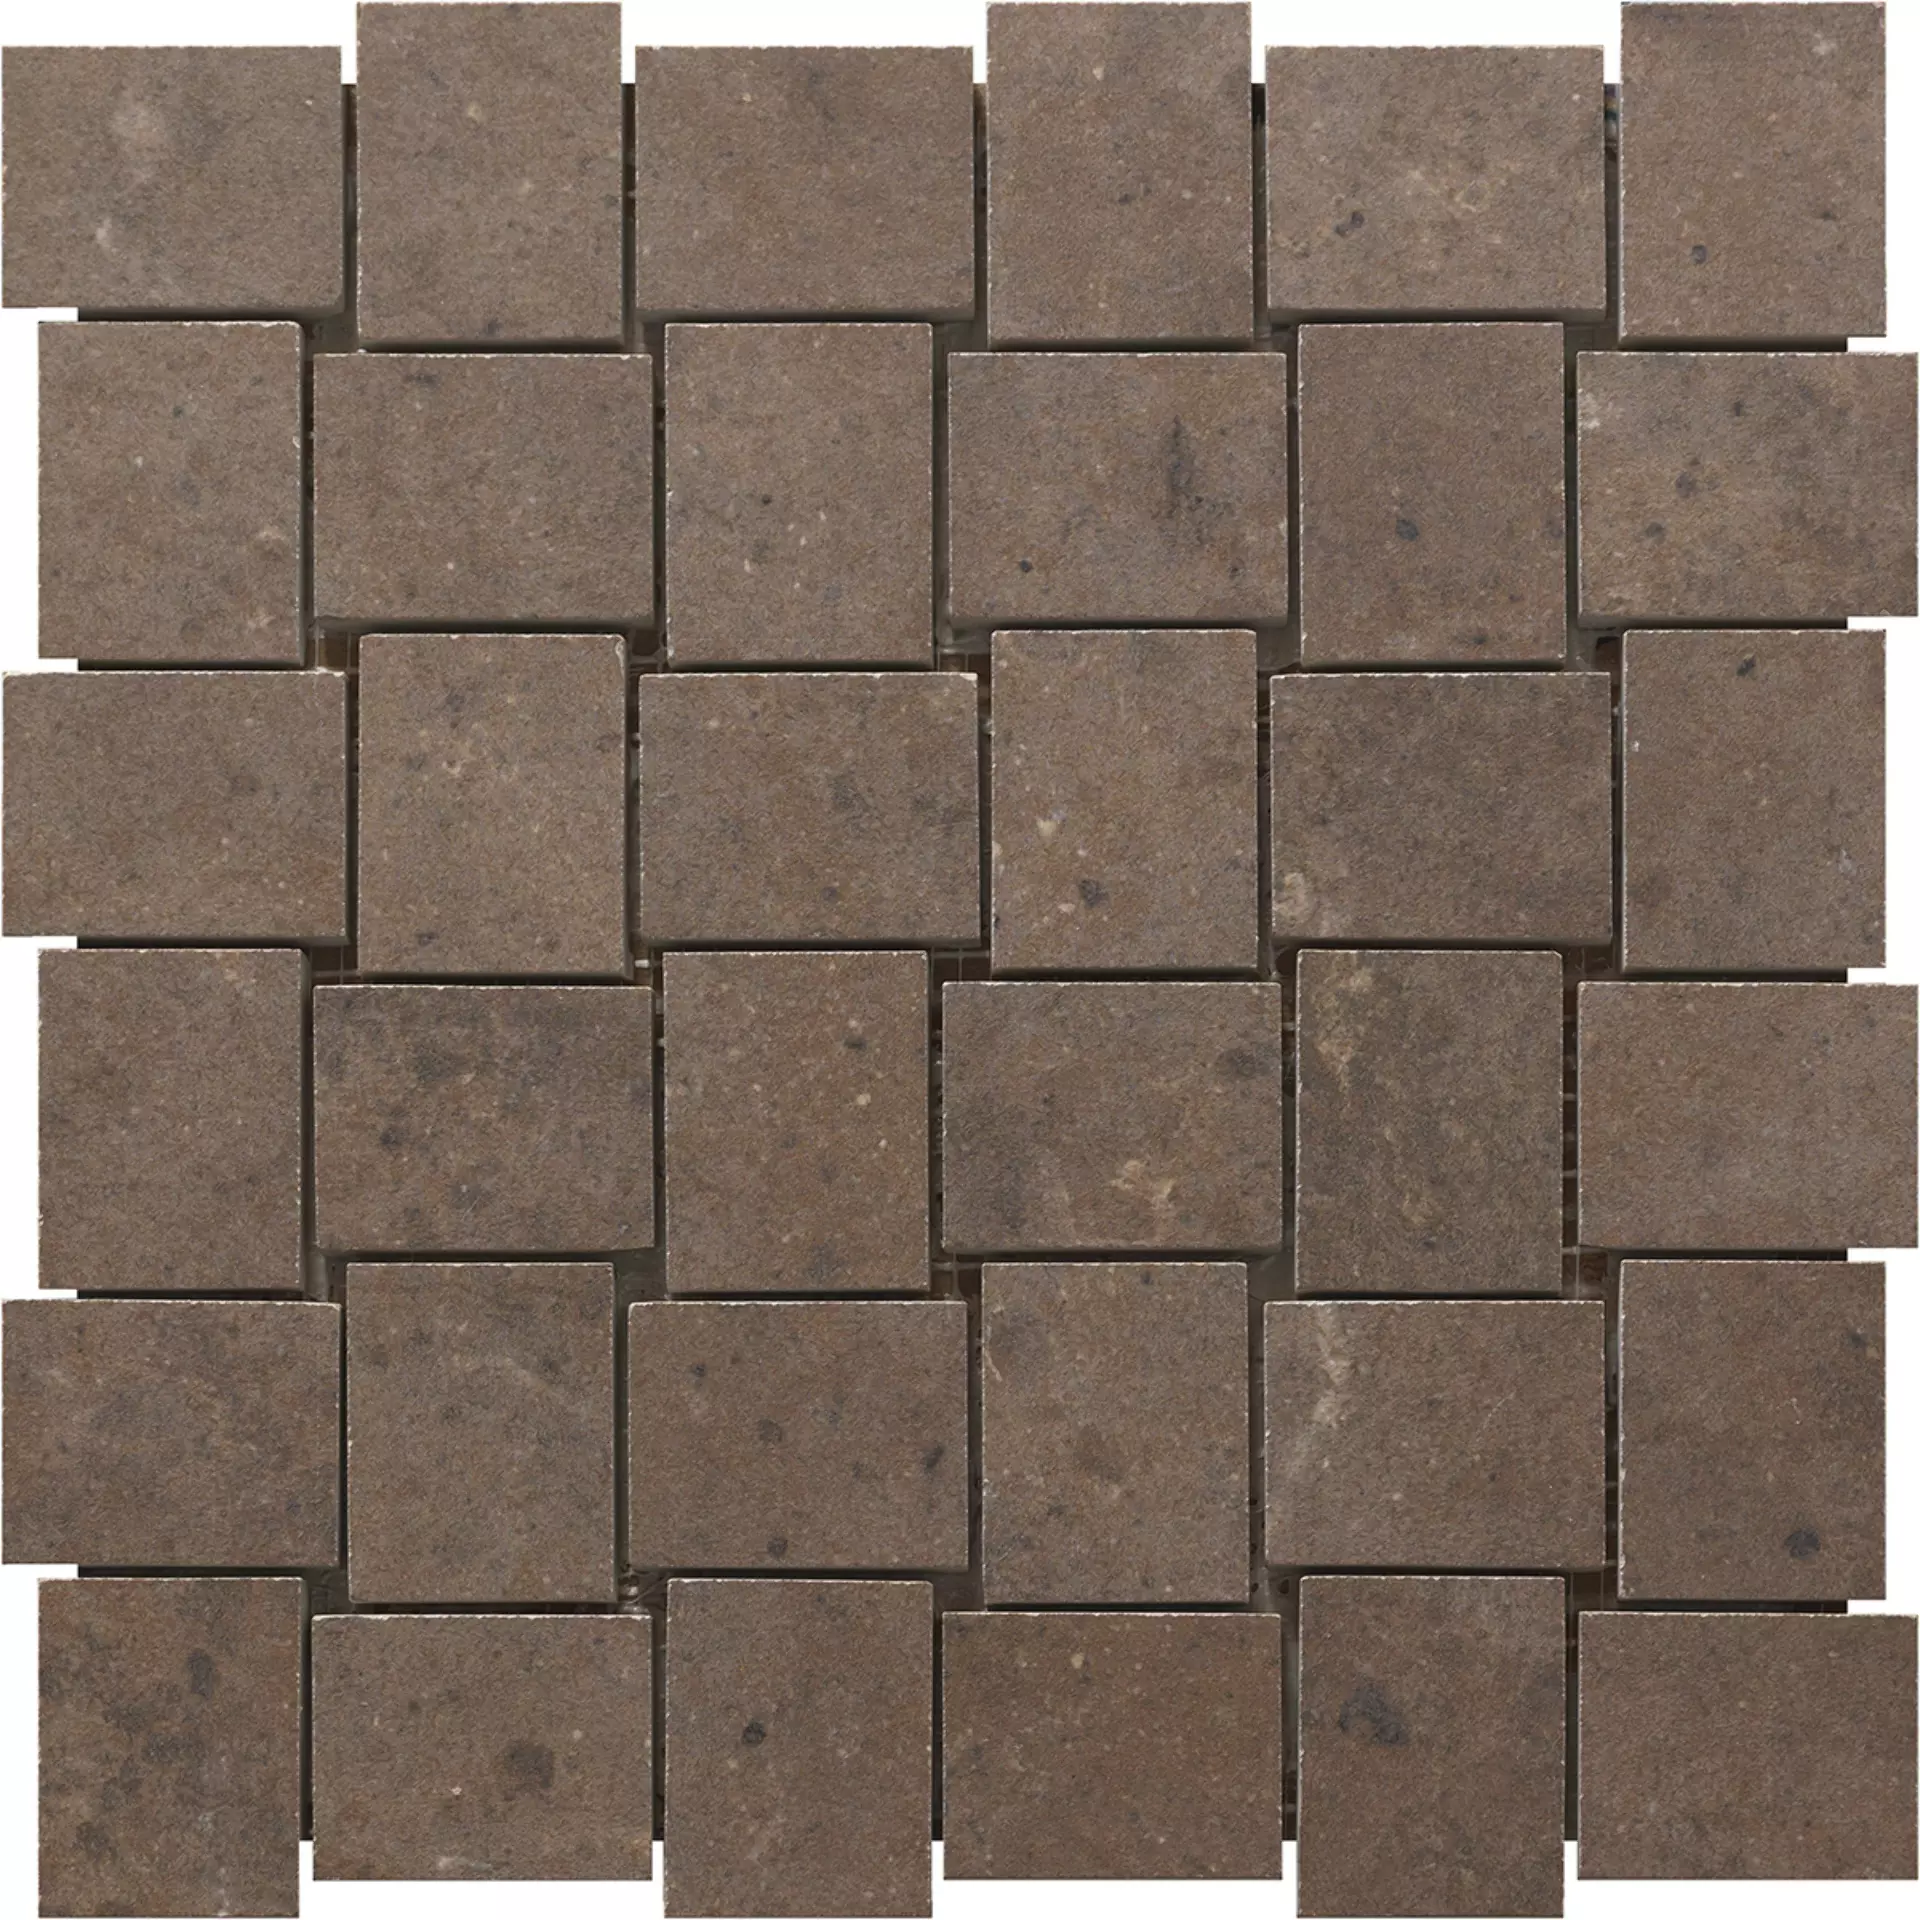 Rondine London Brown Naturale Mosaic J86026 30x30cm 9,5mm